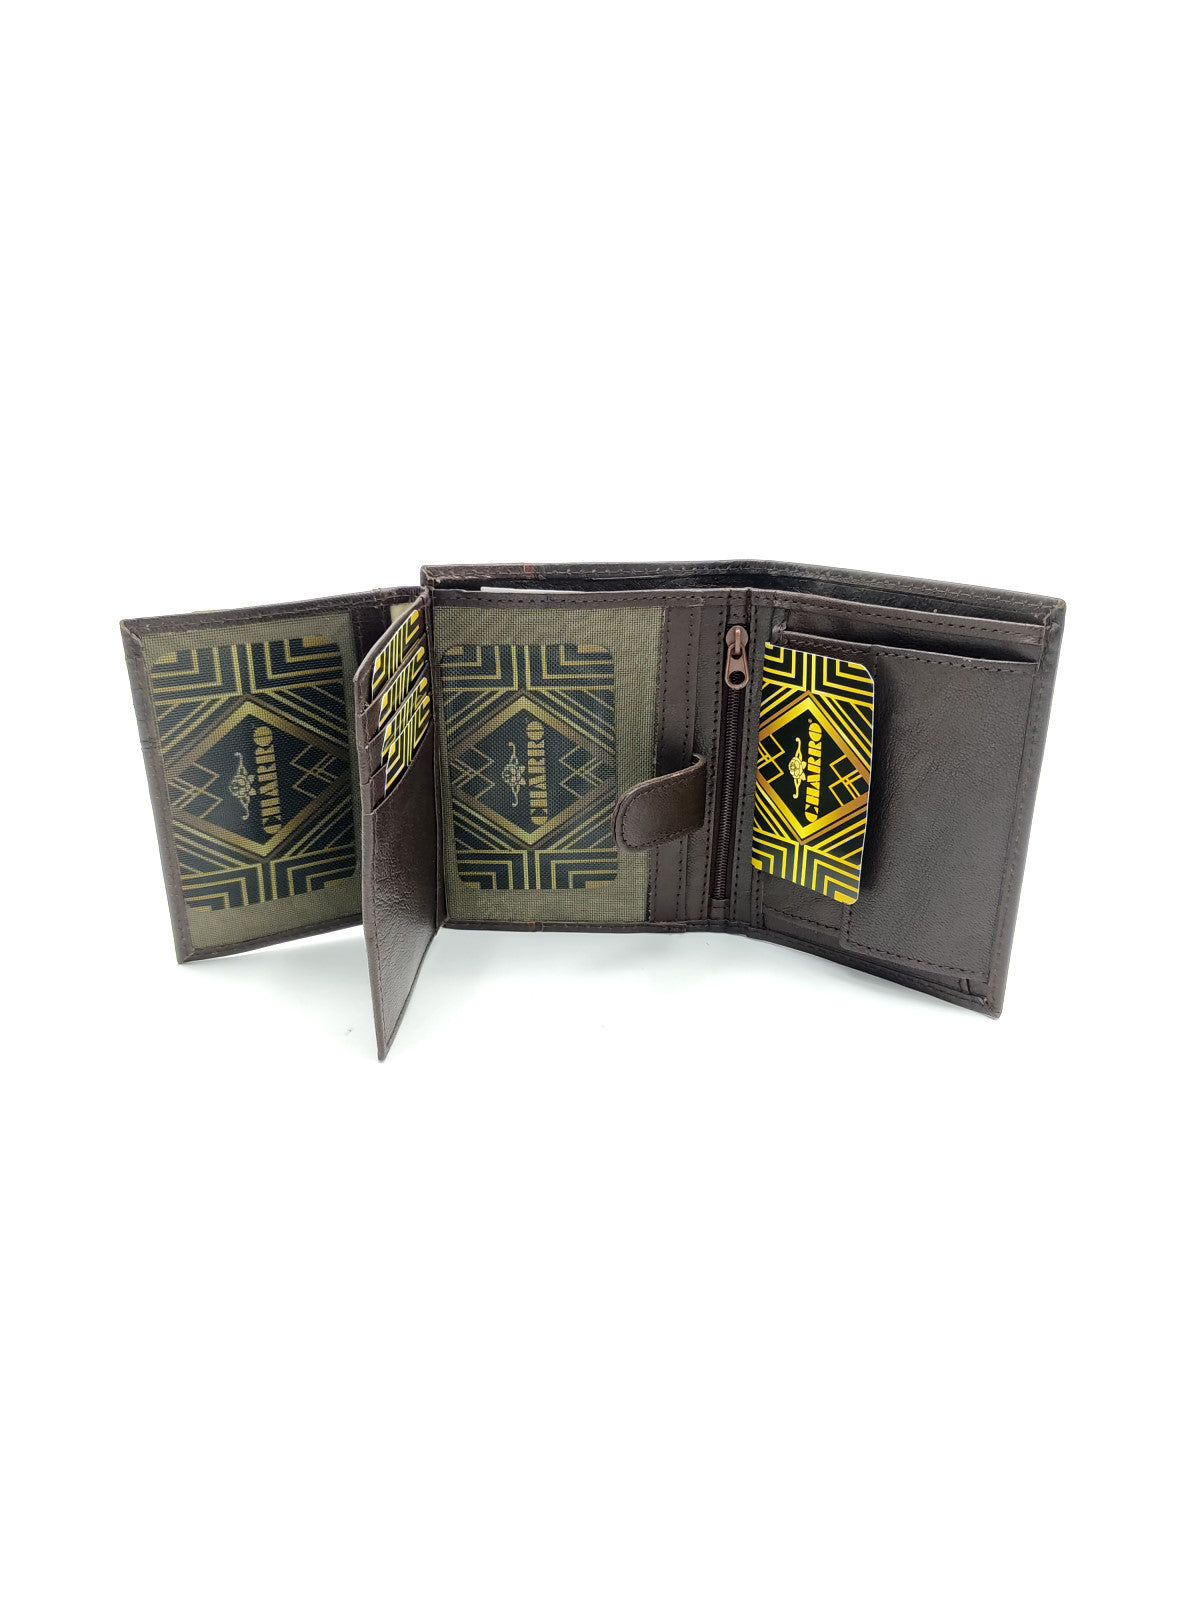 Genuine leather wallet for men, Brand Charro, art. ITTI1379.422